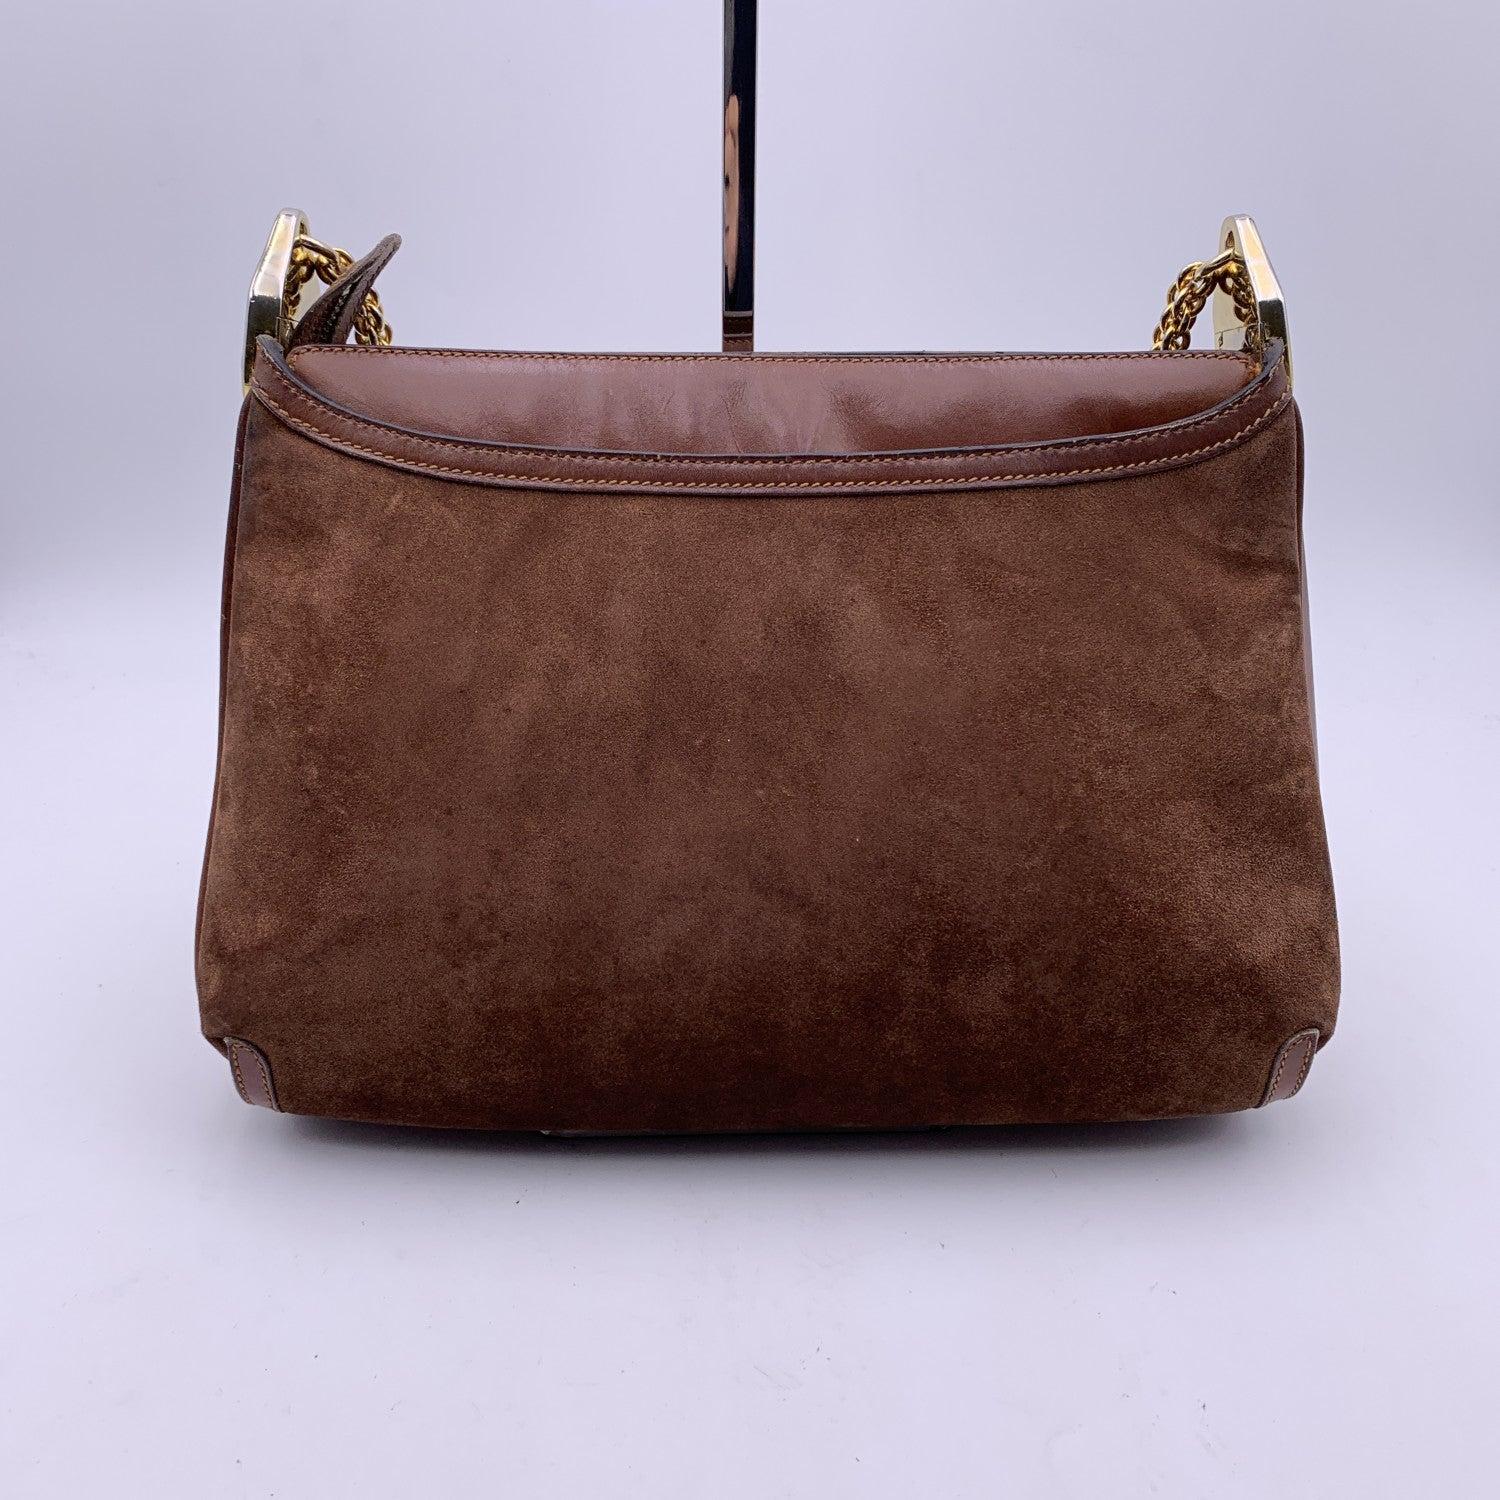 Gucci Vintage Brown Suede Shoulder Bag with Chain Strap 2